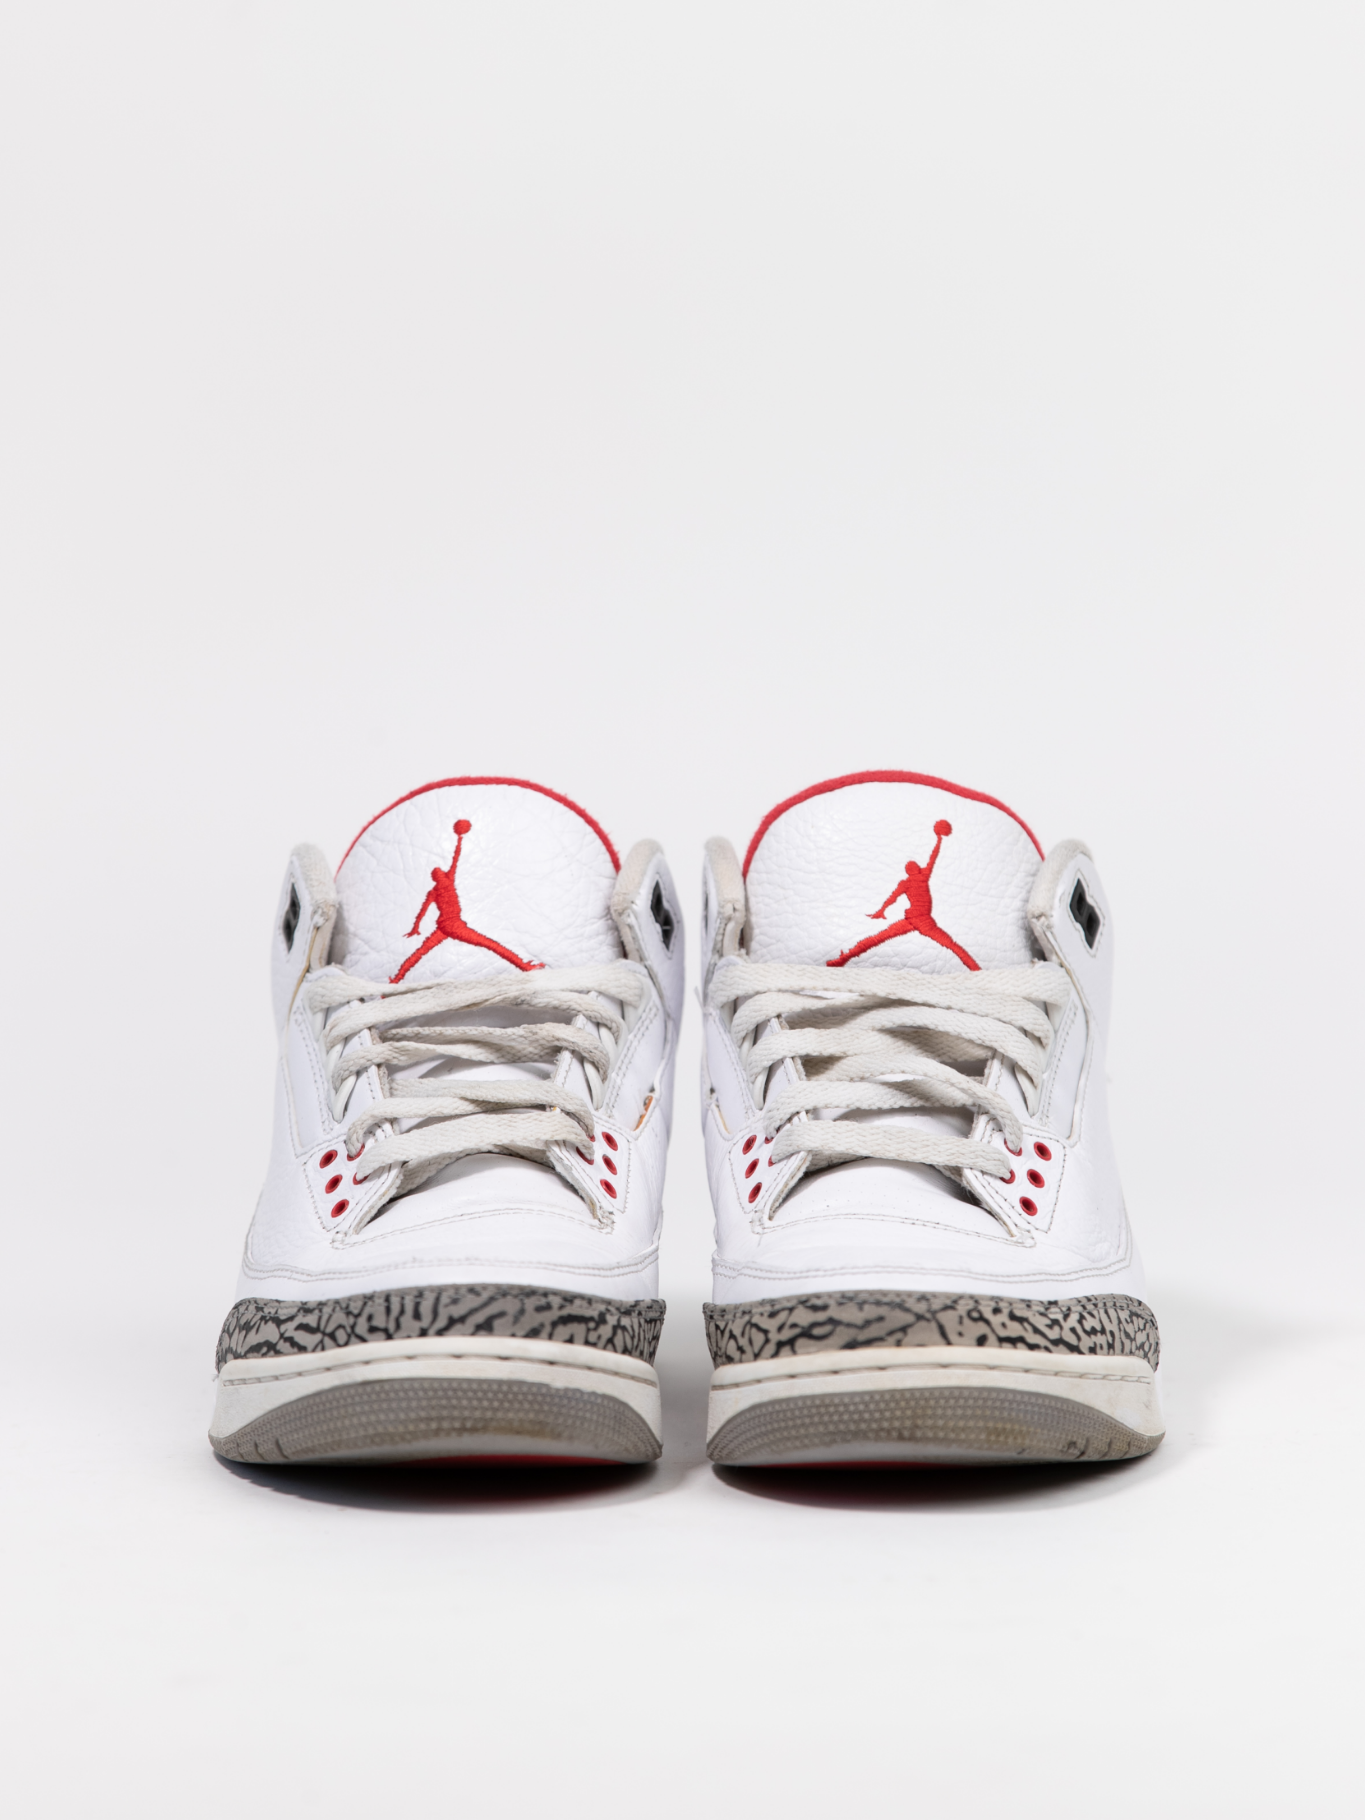 Jordan 3 Retro 'White Cement'